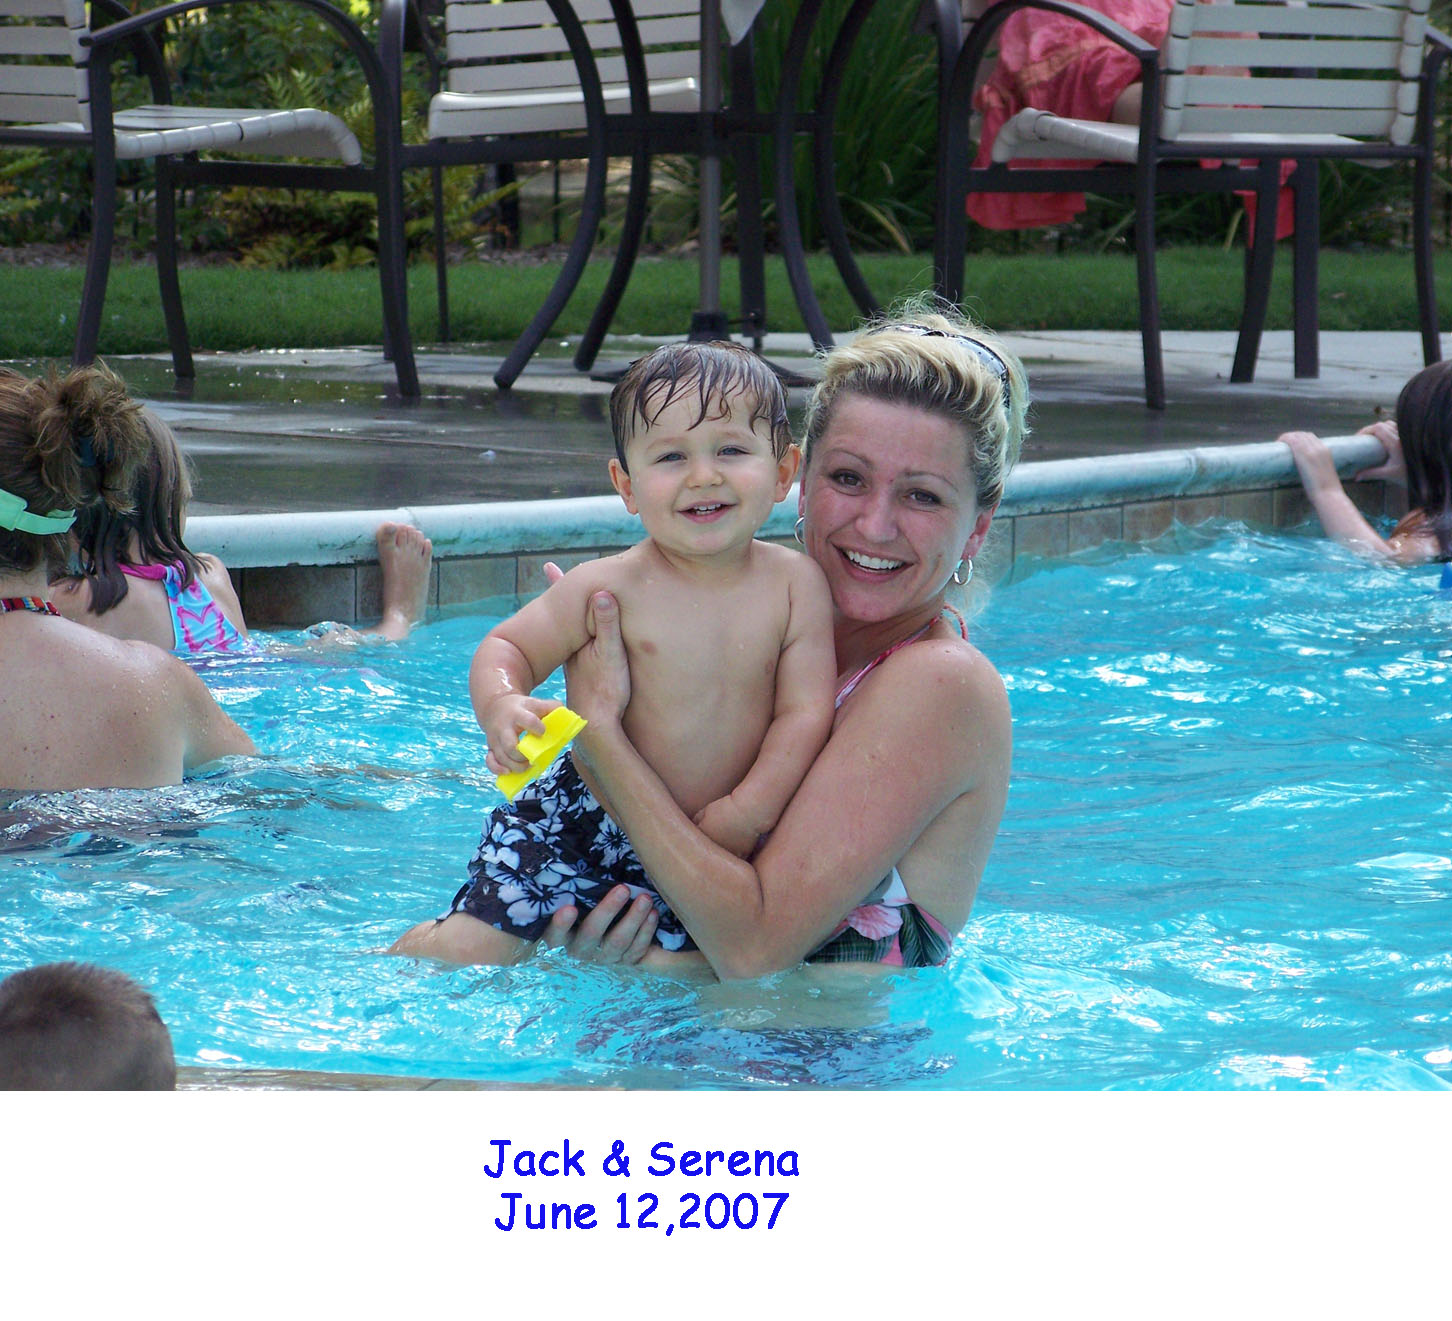 [Jack_Serena+Splash+June+2007.jpg]